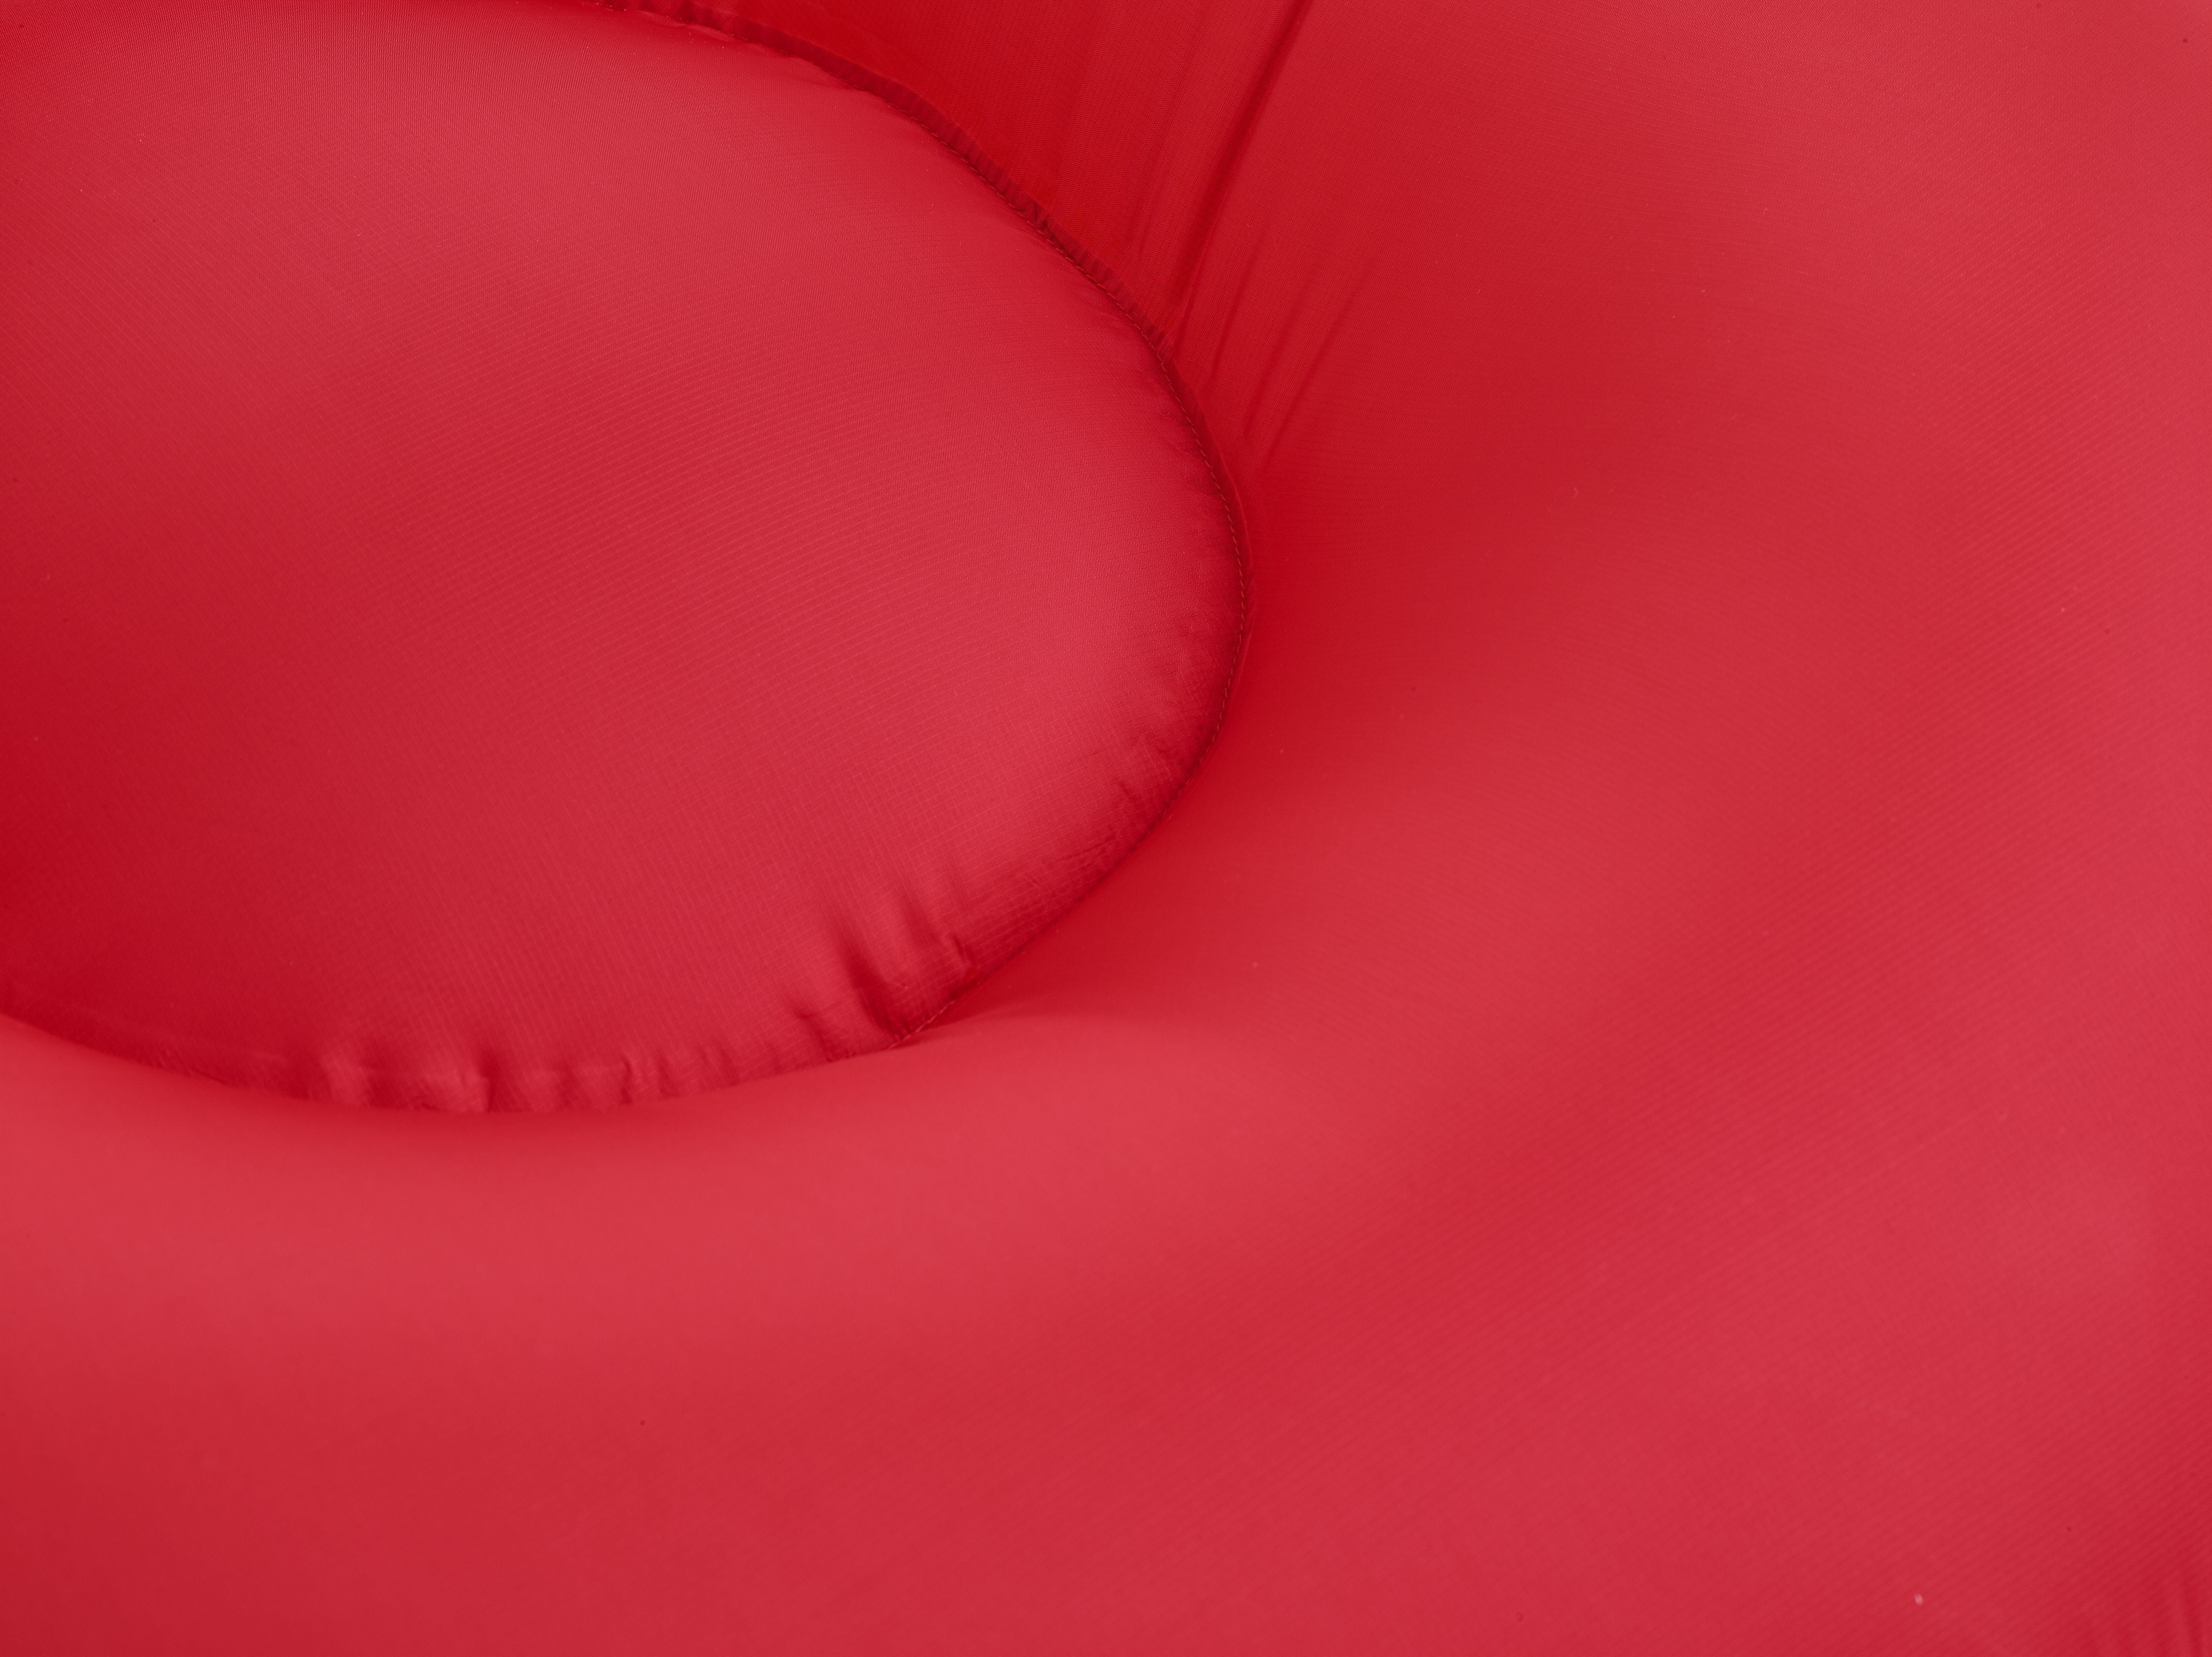 Fatboy Lamzac o asiento inflable 3.0, rojo